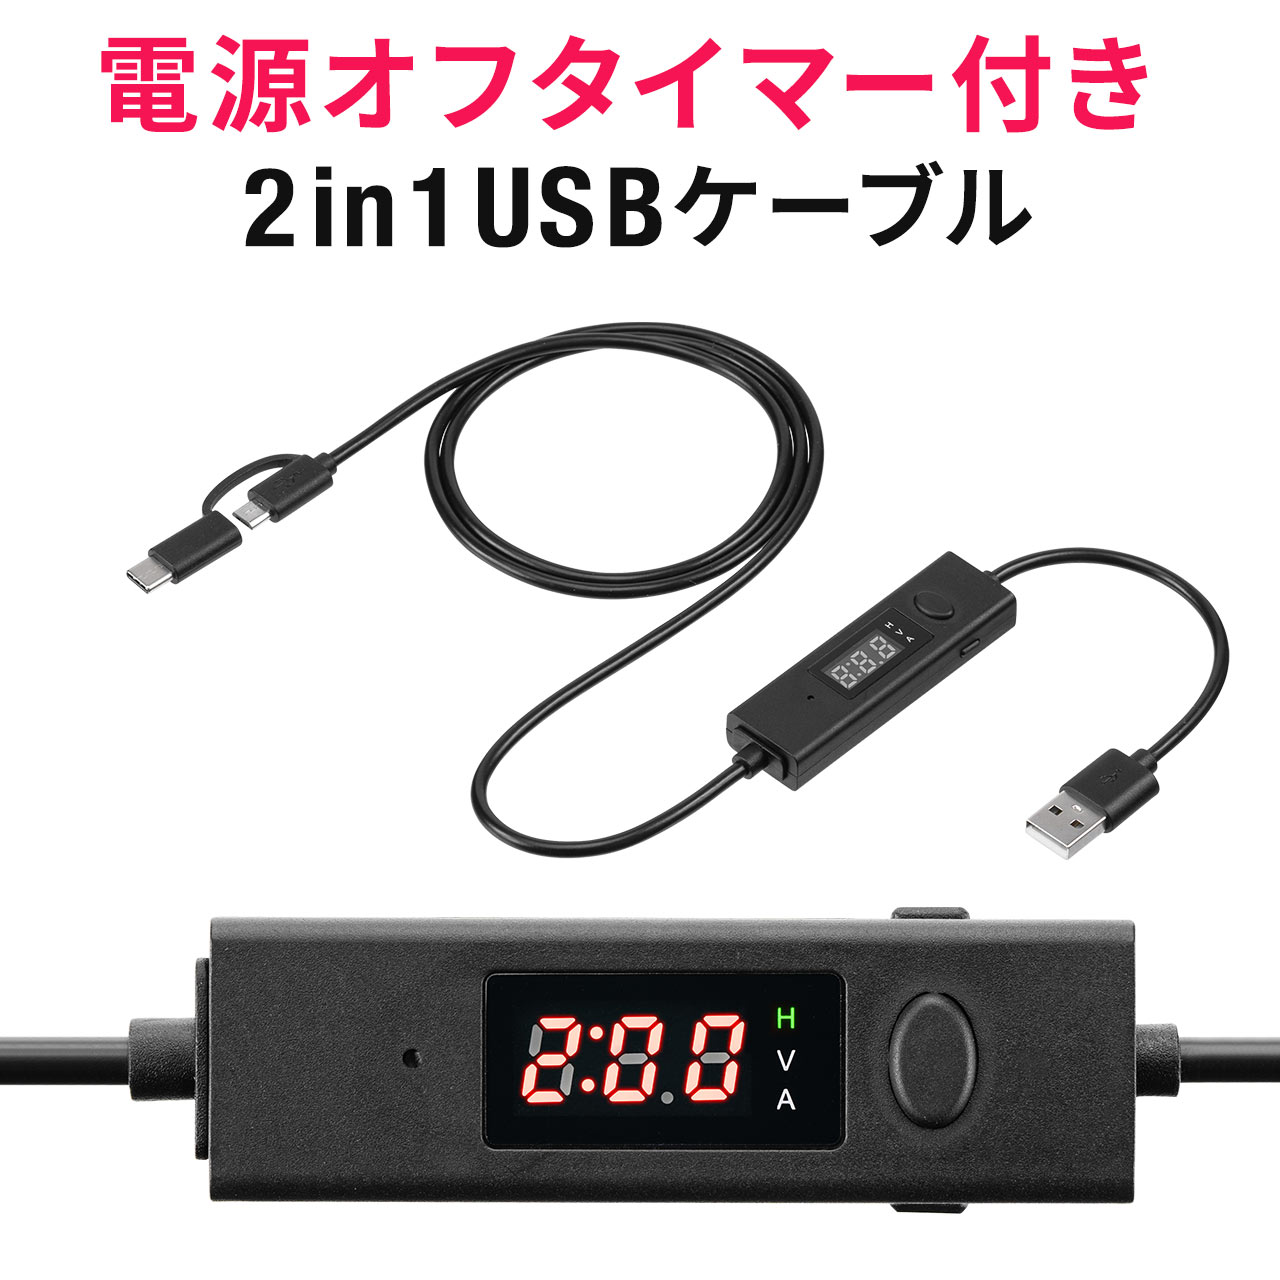 USBケーブル タイマー付き 2in1 USB2.0 電流測定 Type-C タイプC microUSB 充電 データ転送 3A対応 タイマー ケーブル 電源 給電 停止 切り忘れ防止 500-USB058